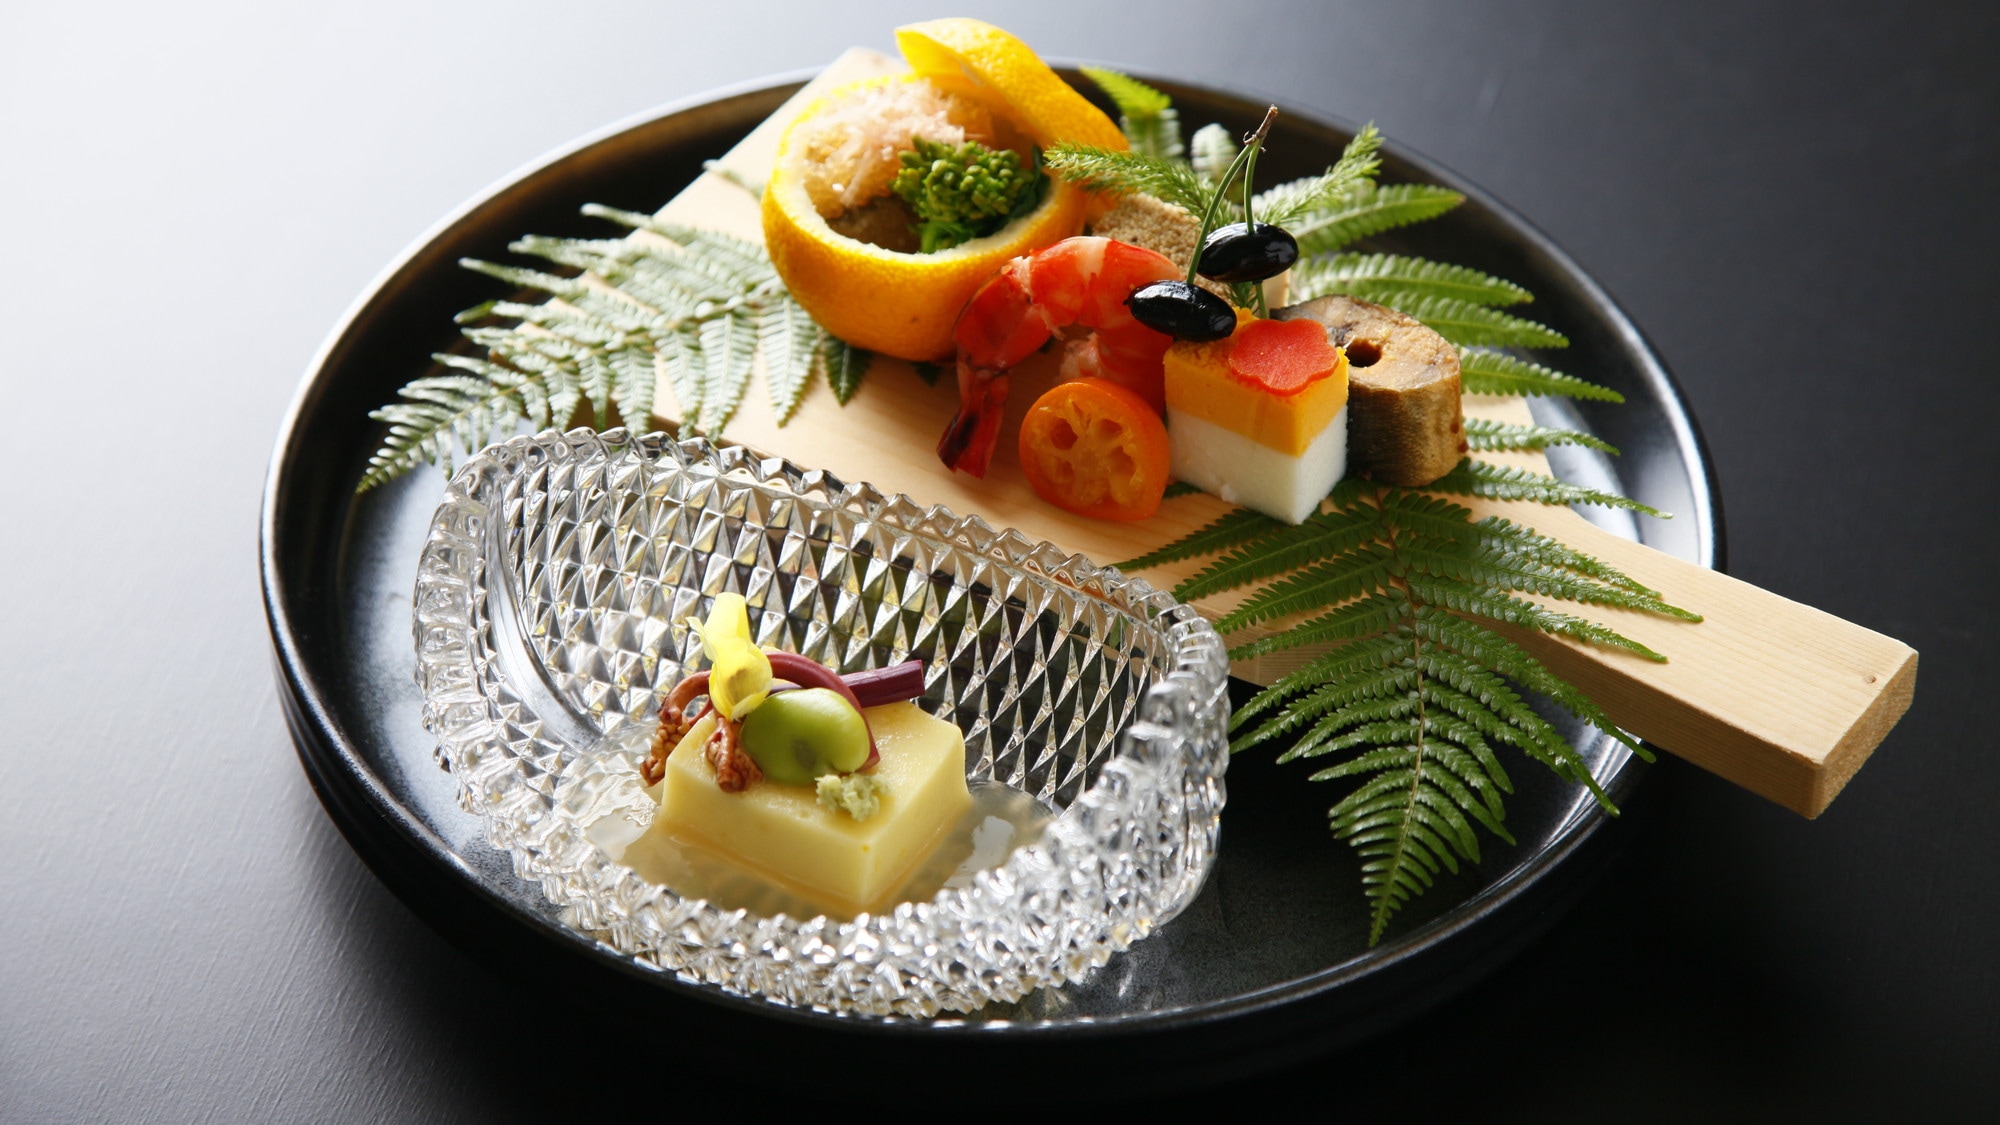 Please enjoy seasonal kaiseki cuisine that is fun with colorful eyes. ※image